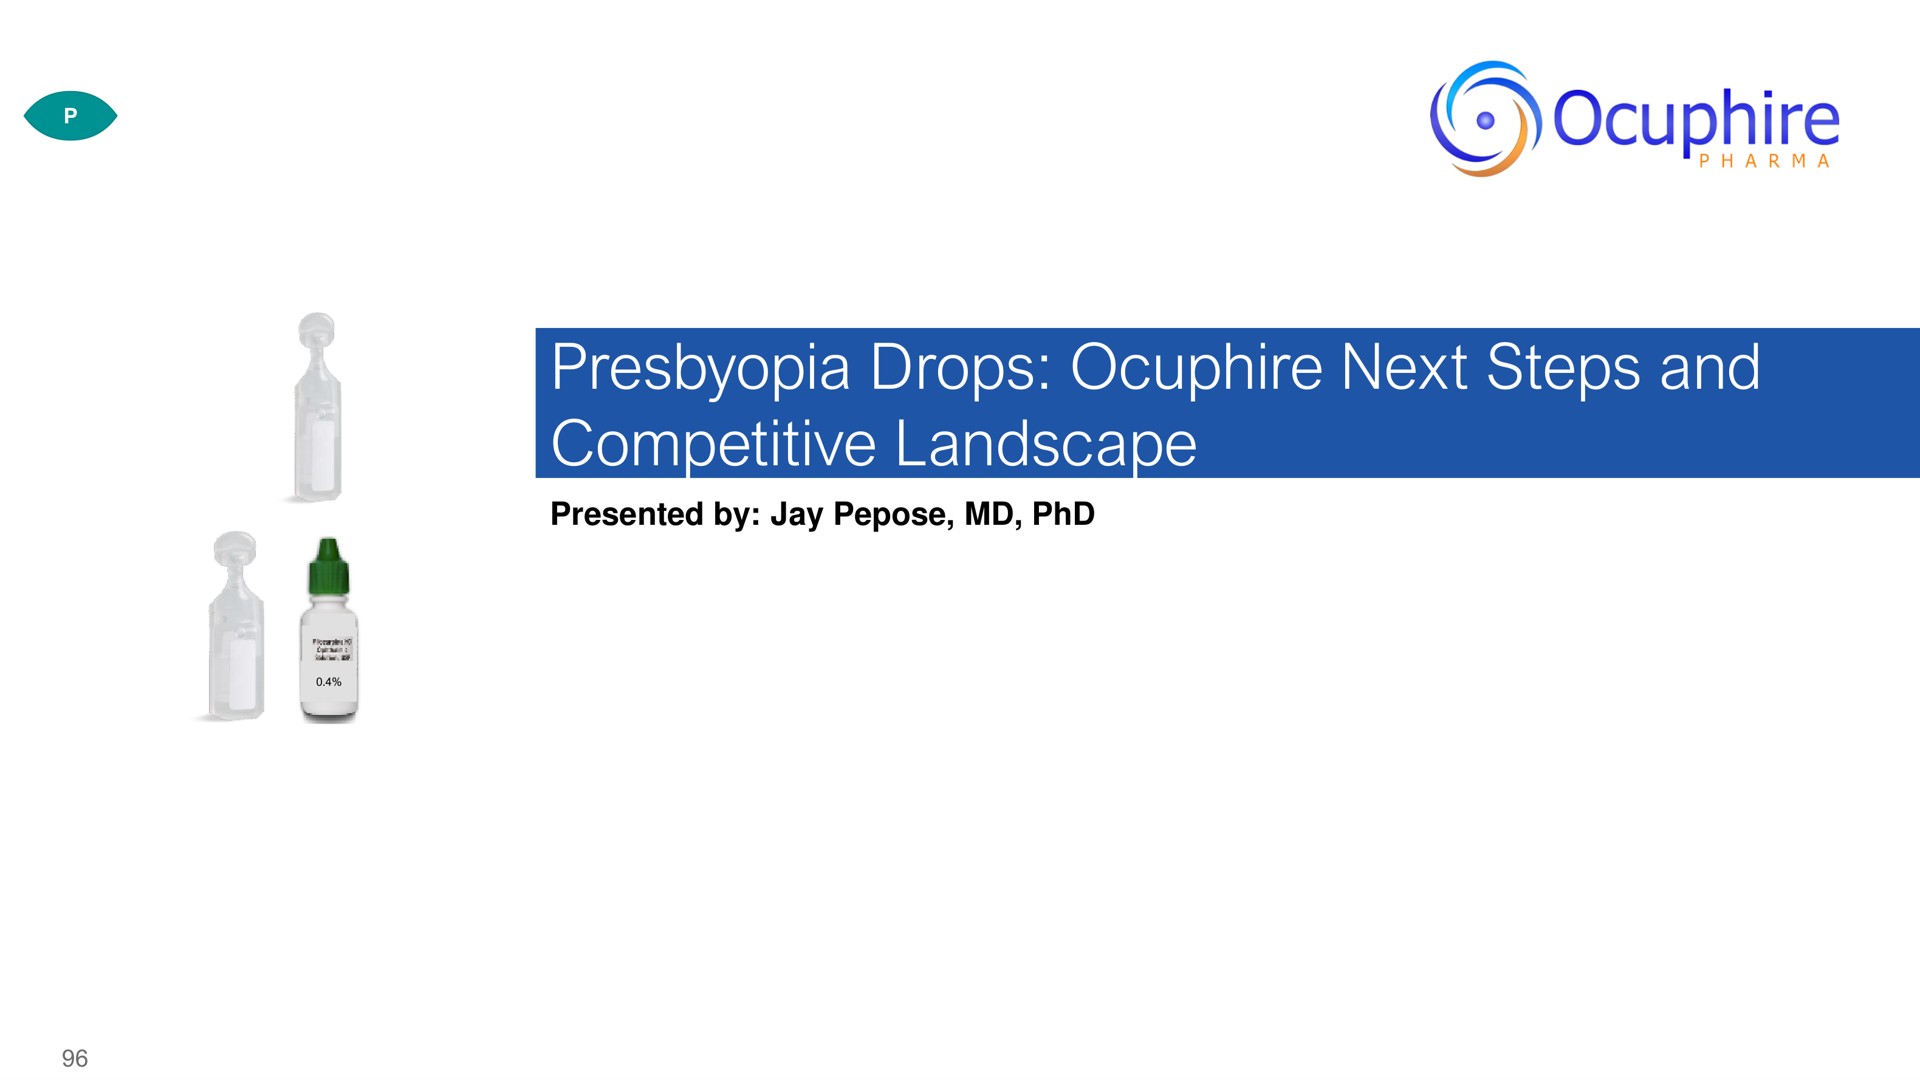 presbyopia drops next steps and competitive landscape | Ocuphire Pharma